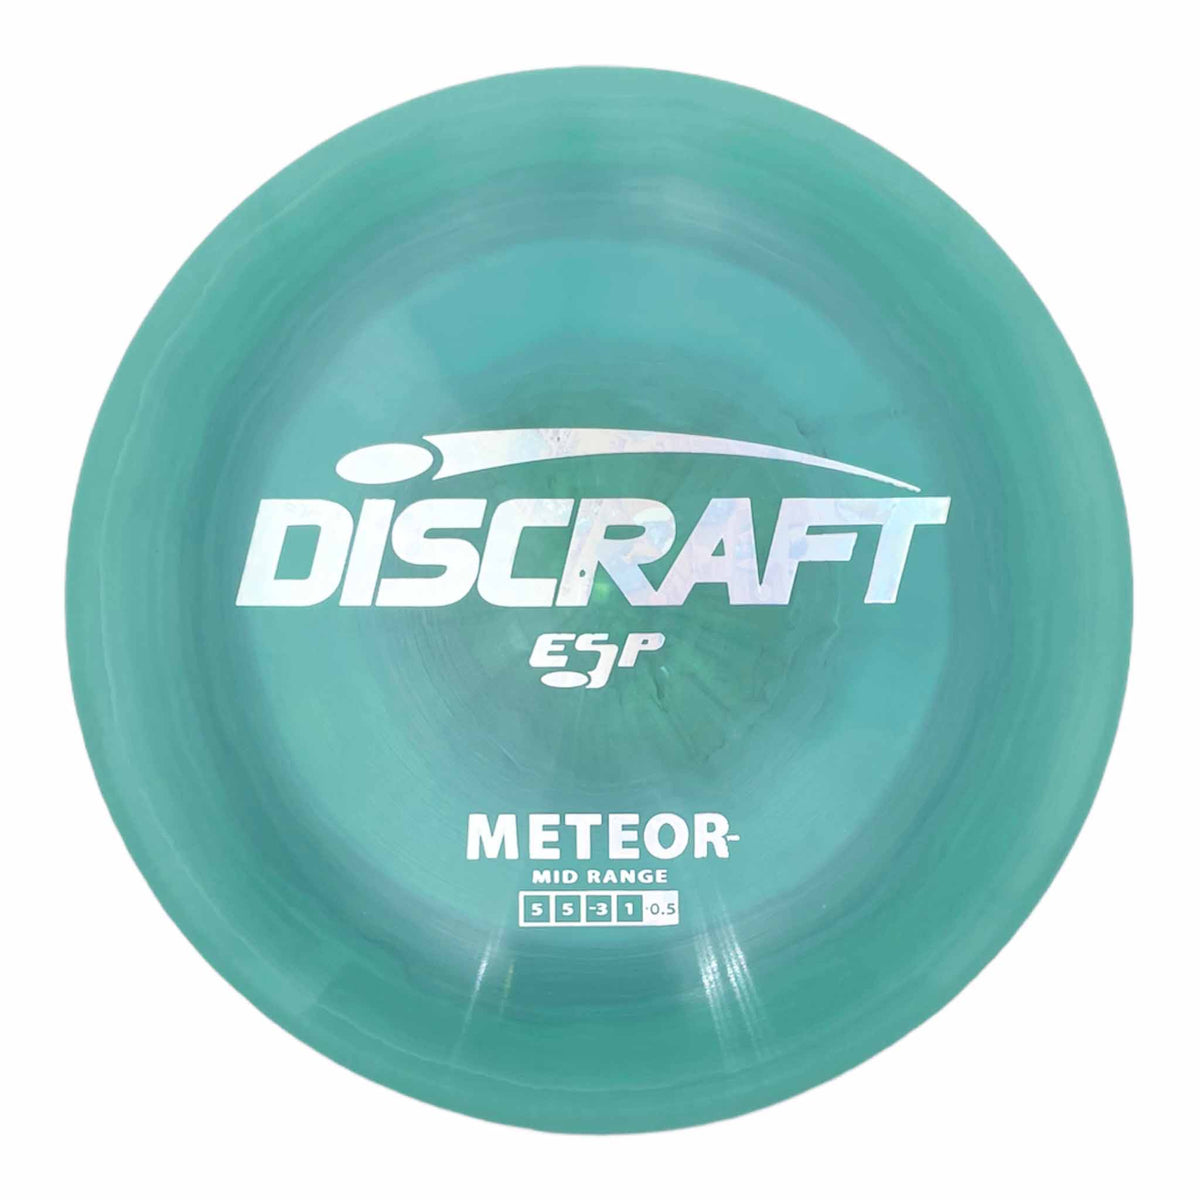 Discraft ESP Meteor midrange - Green / Silver